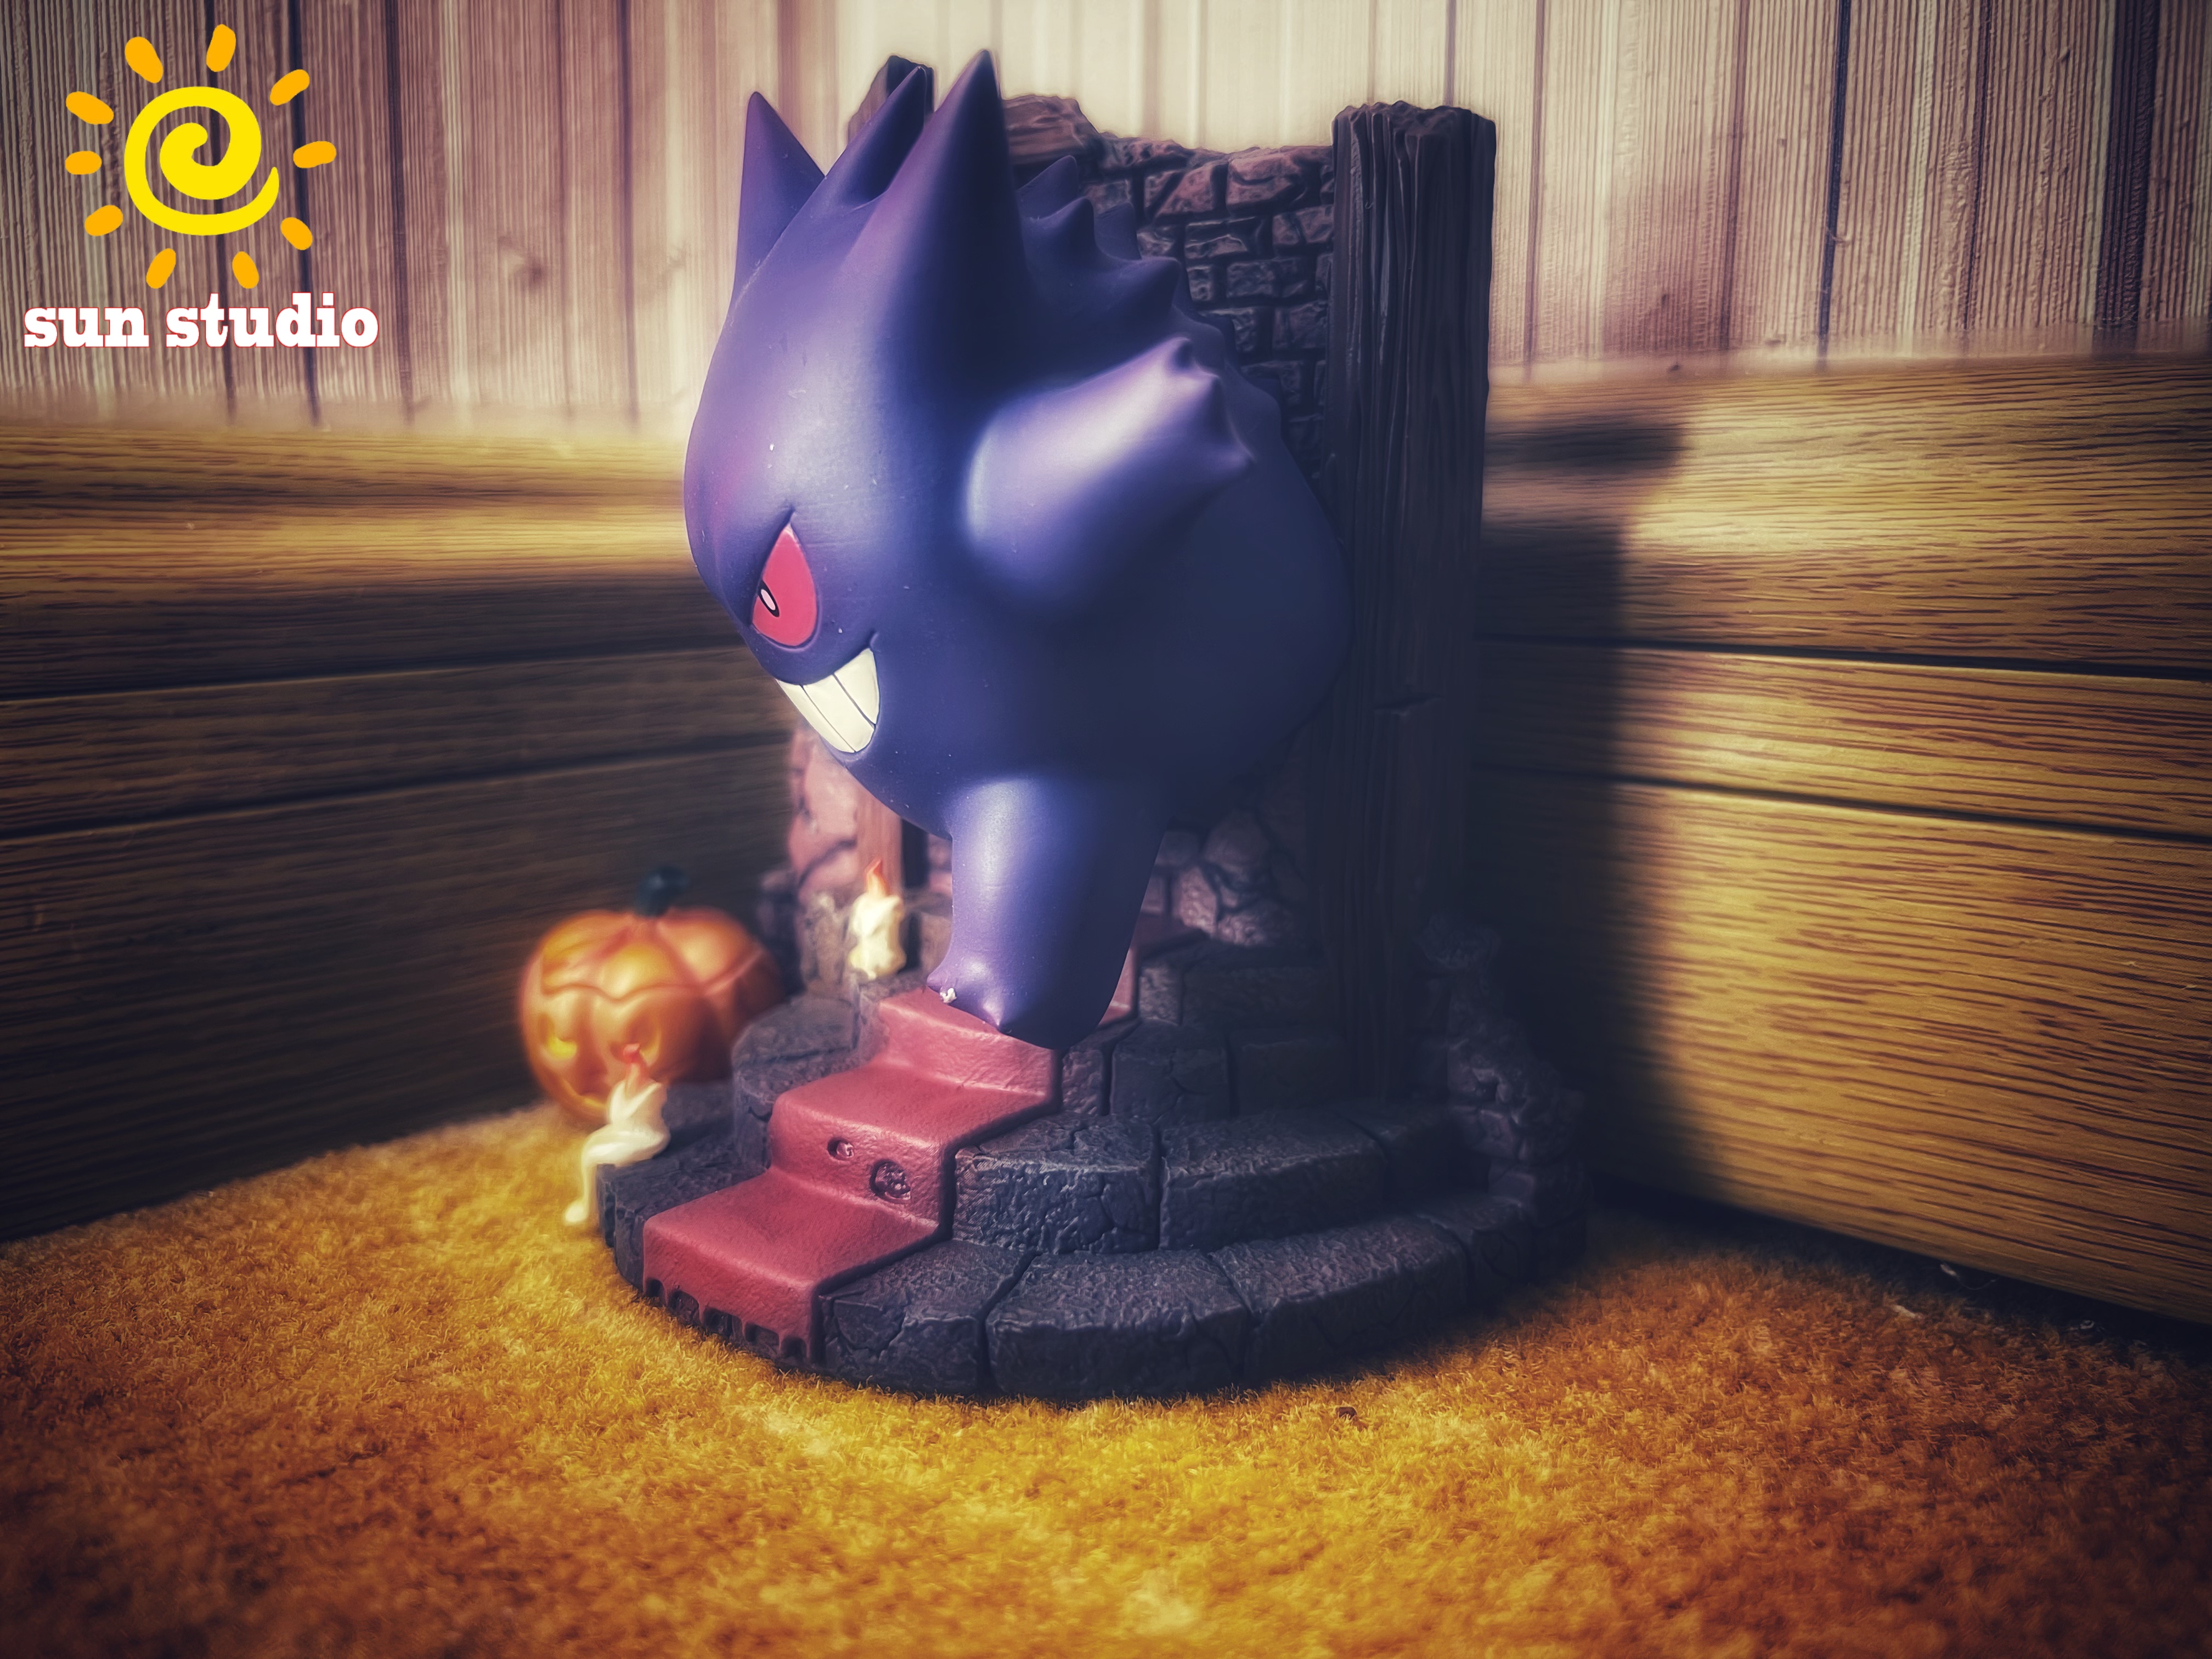 Pokémon #2 Gengar Poké Ball Resin Statue - WING Studio [Pre-Order] – YesGK